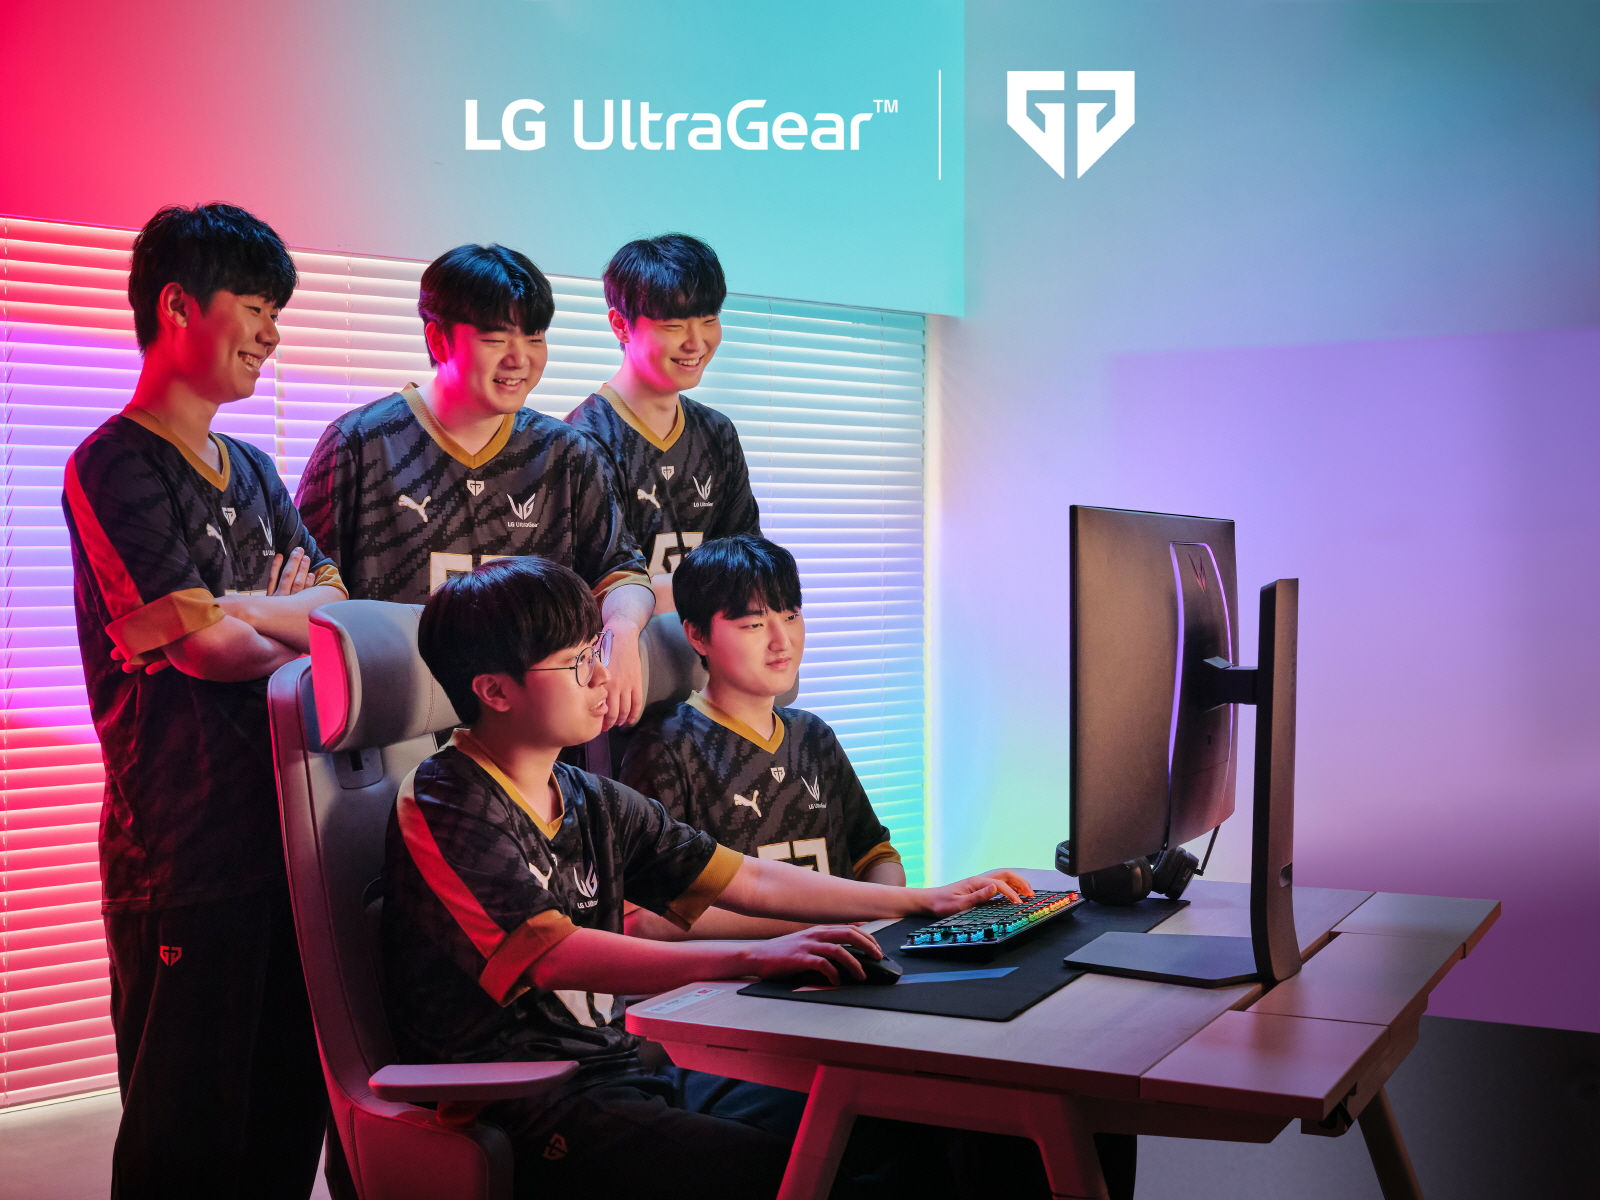 LG UltraGear Continues Partnership with Gen.G Esports